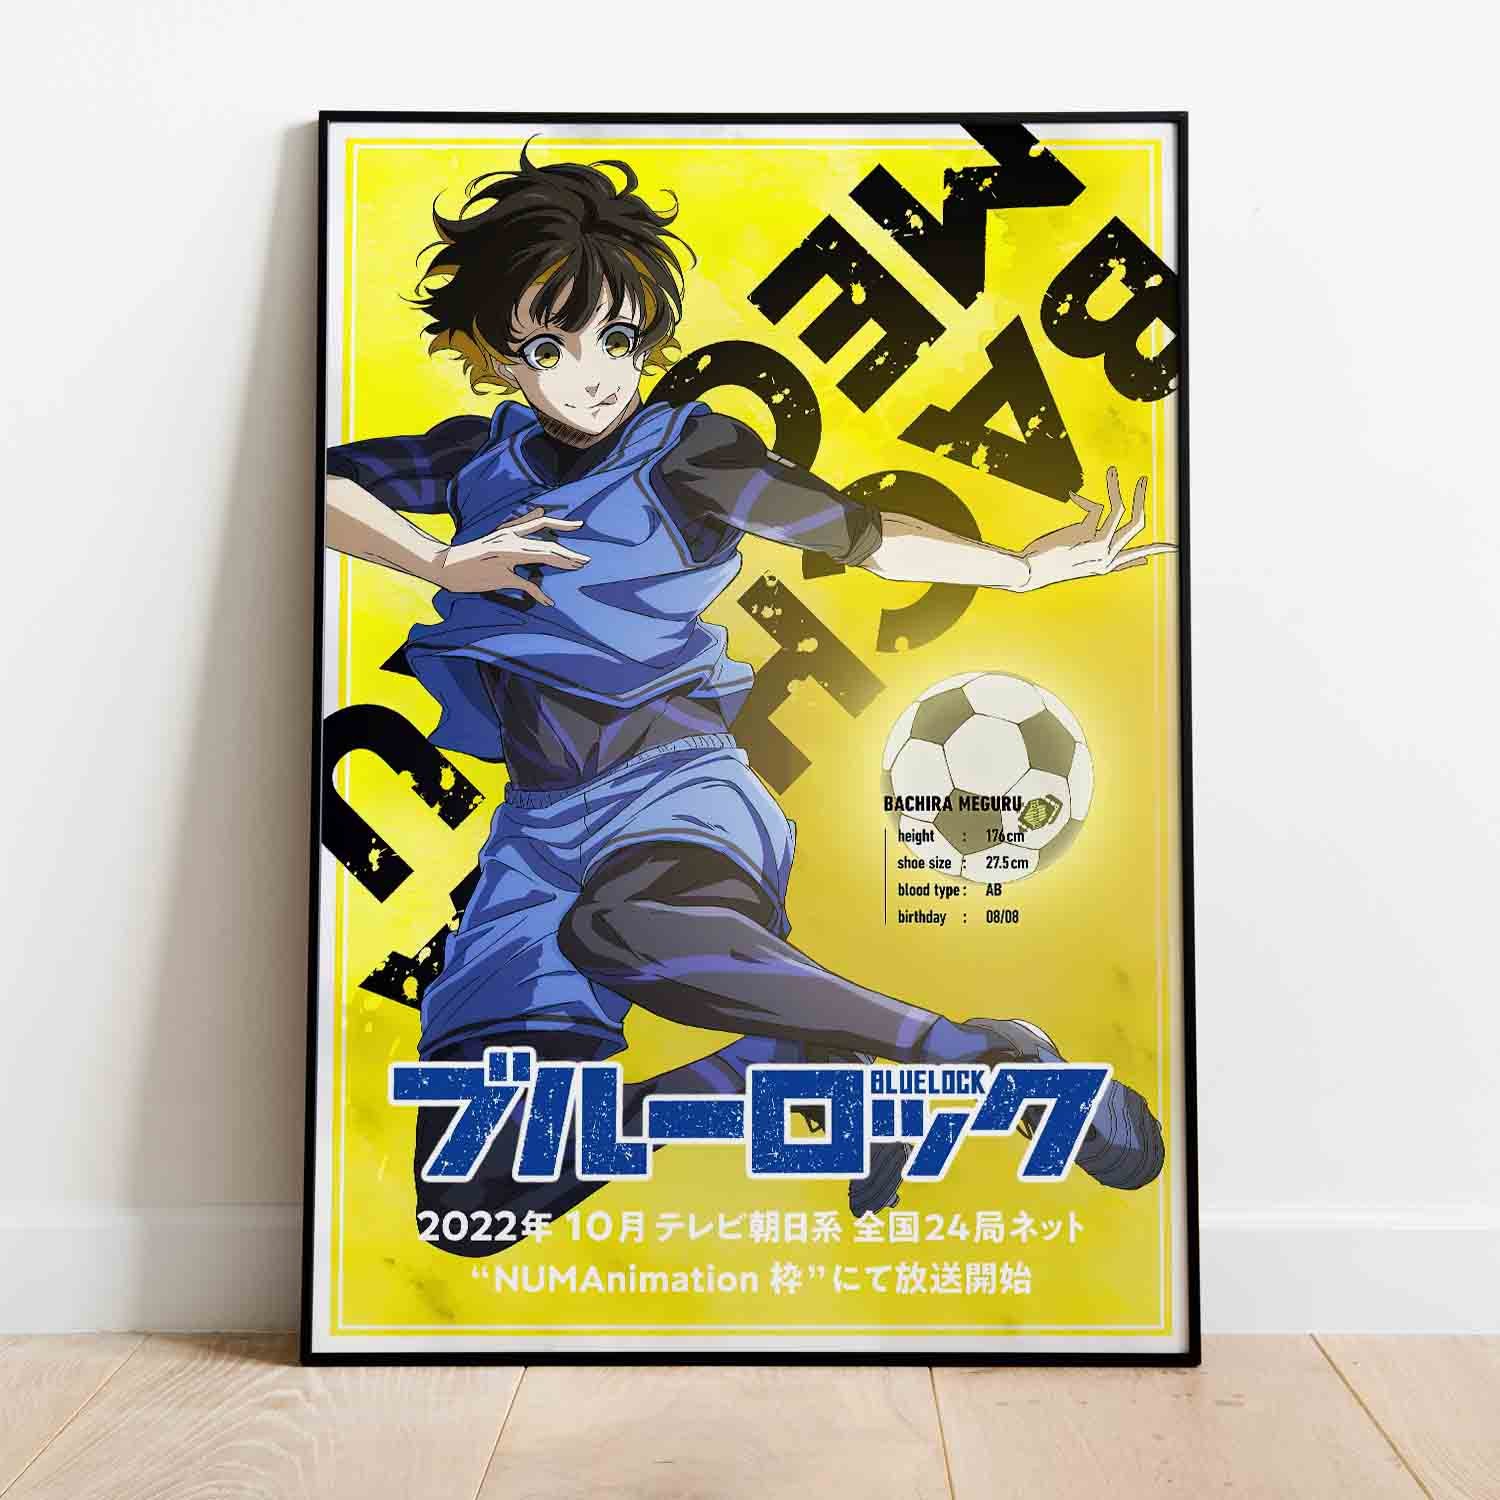 Bluelock Anime Bachira Playercard Digital Poster 